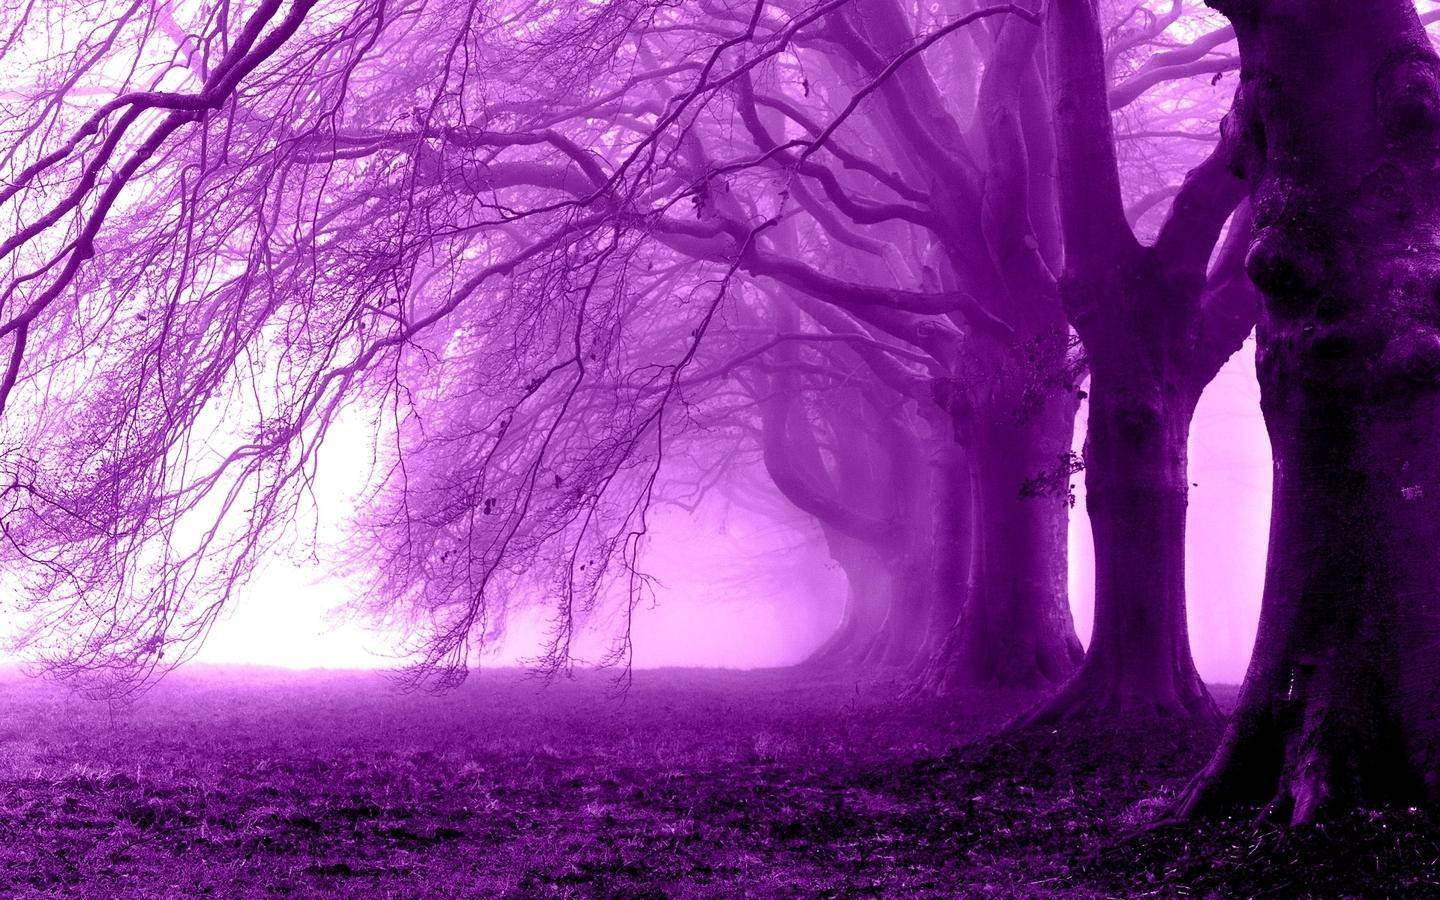 Dead Purple Trees In The Forest Wallpaper